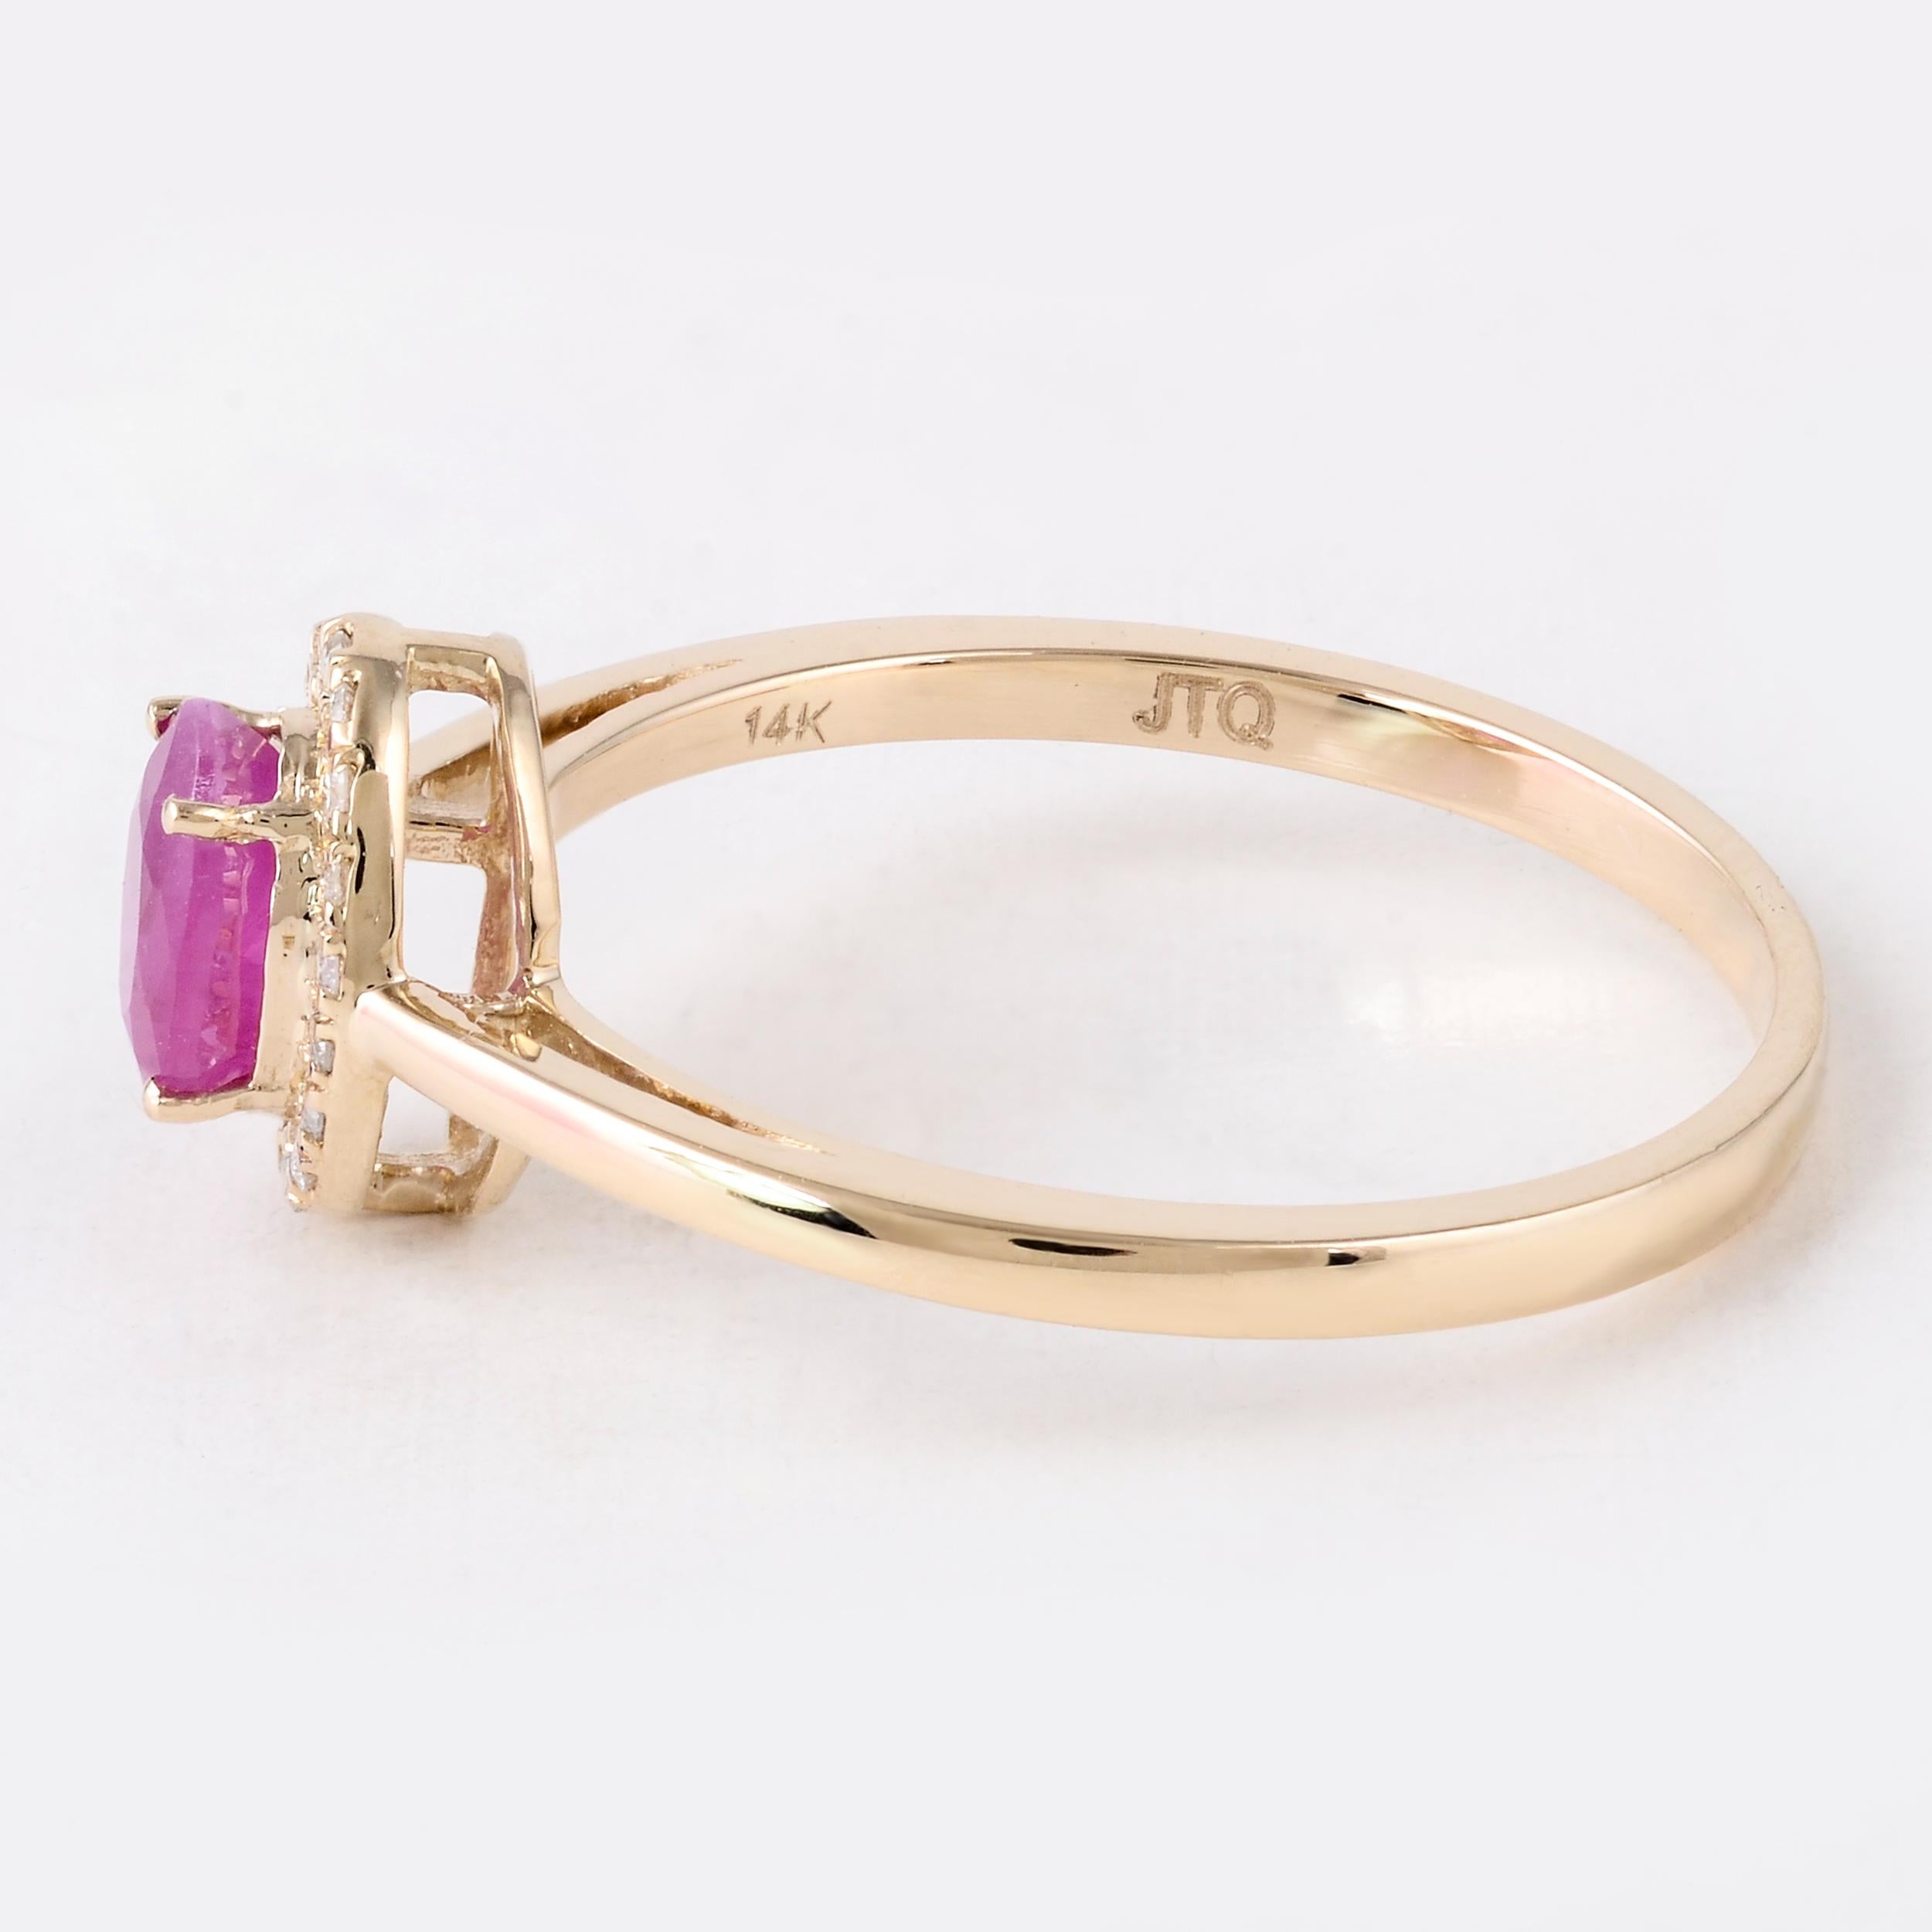 Brilliant Cut Elegant 14K Ruby & Diamond Cocktail Ring, Size 7 - Statement Jewelry Piece For Sale